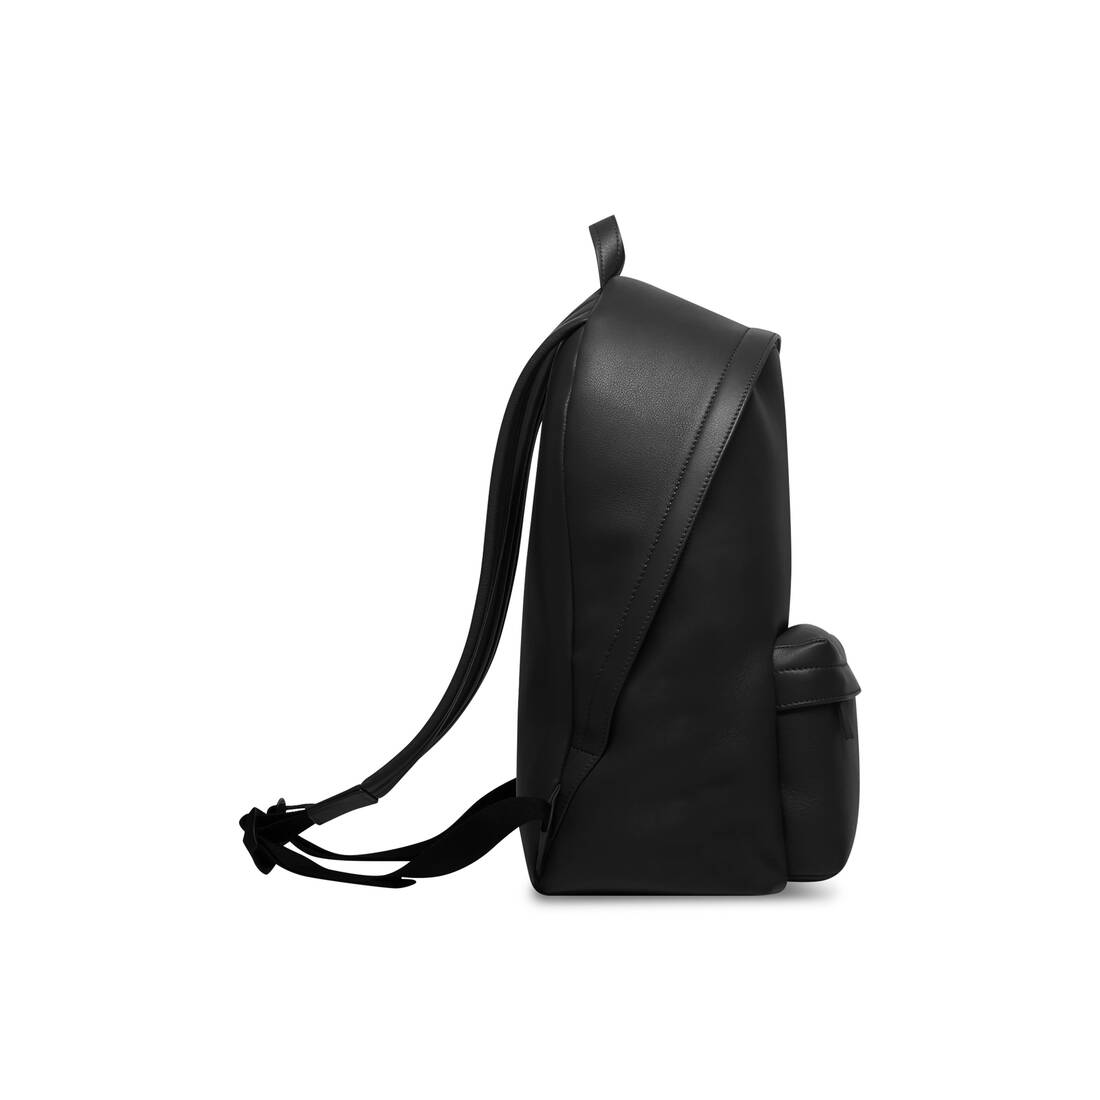 Black Leather Backpack, Men's Bags